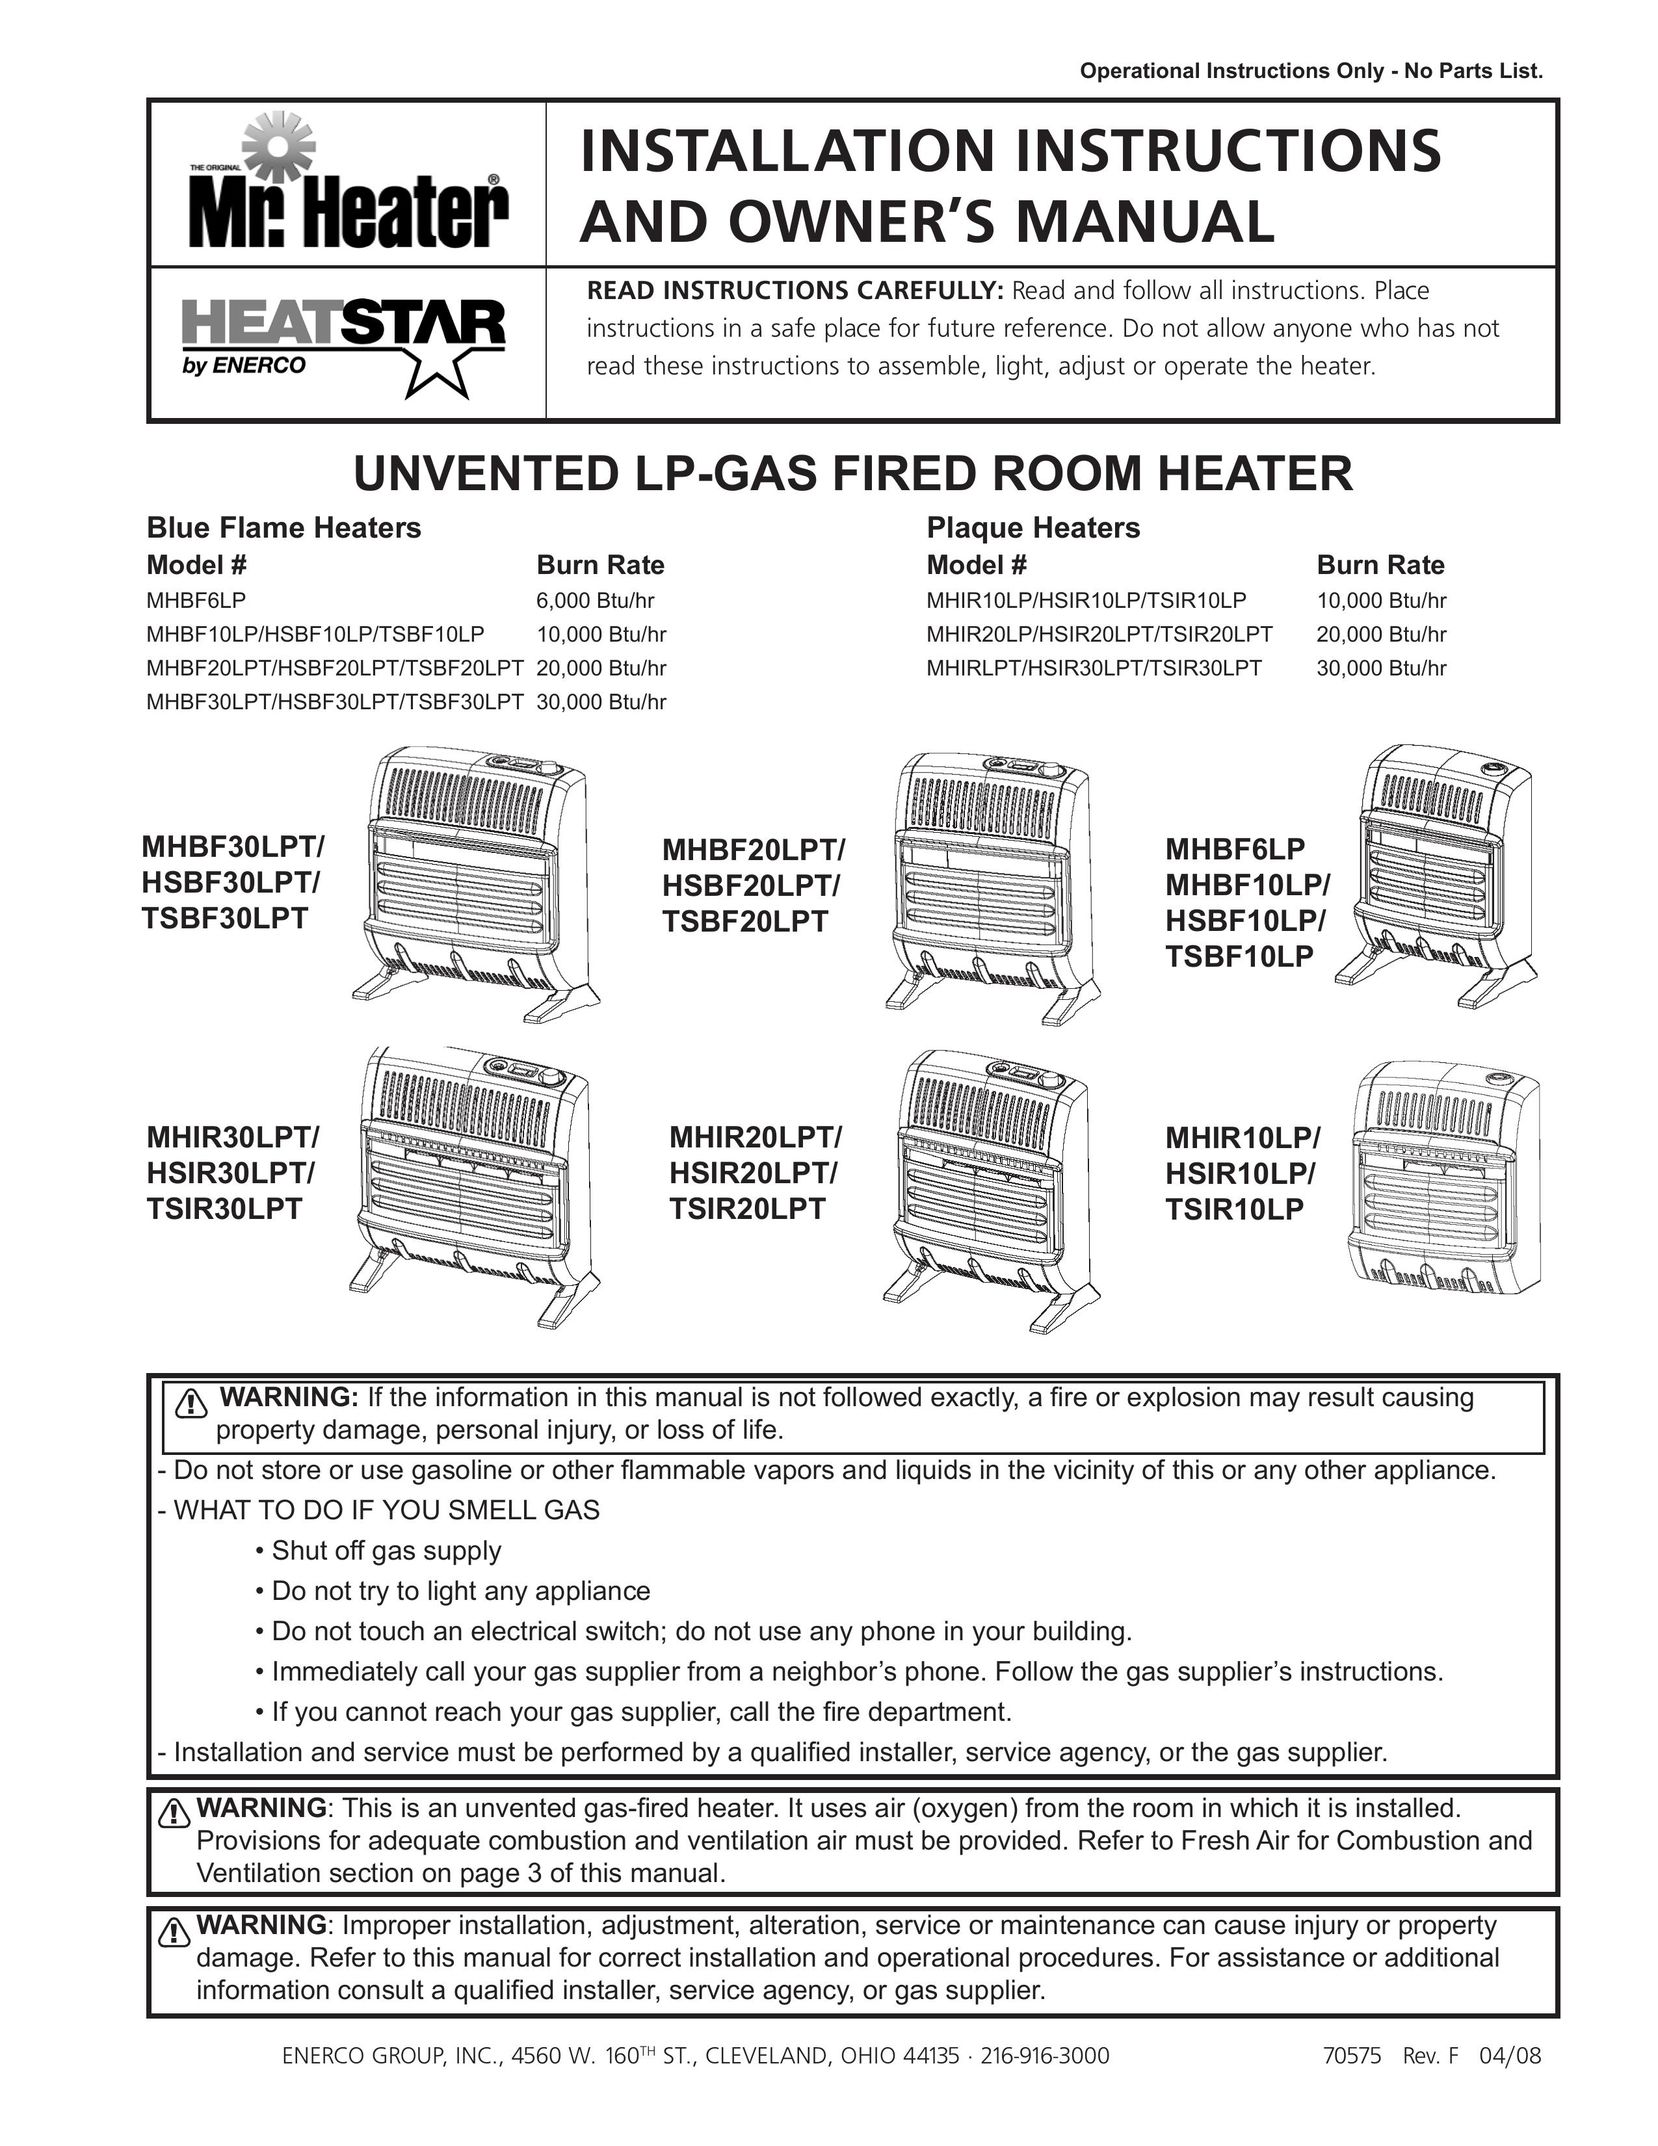 Enerco HSBF30LPT Electric Heater User Manual